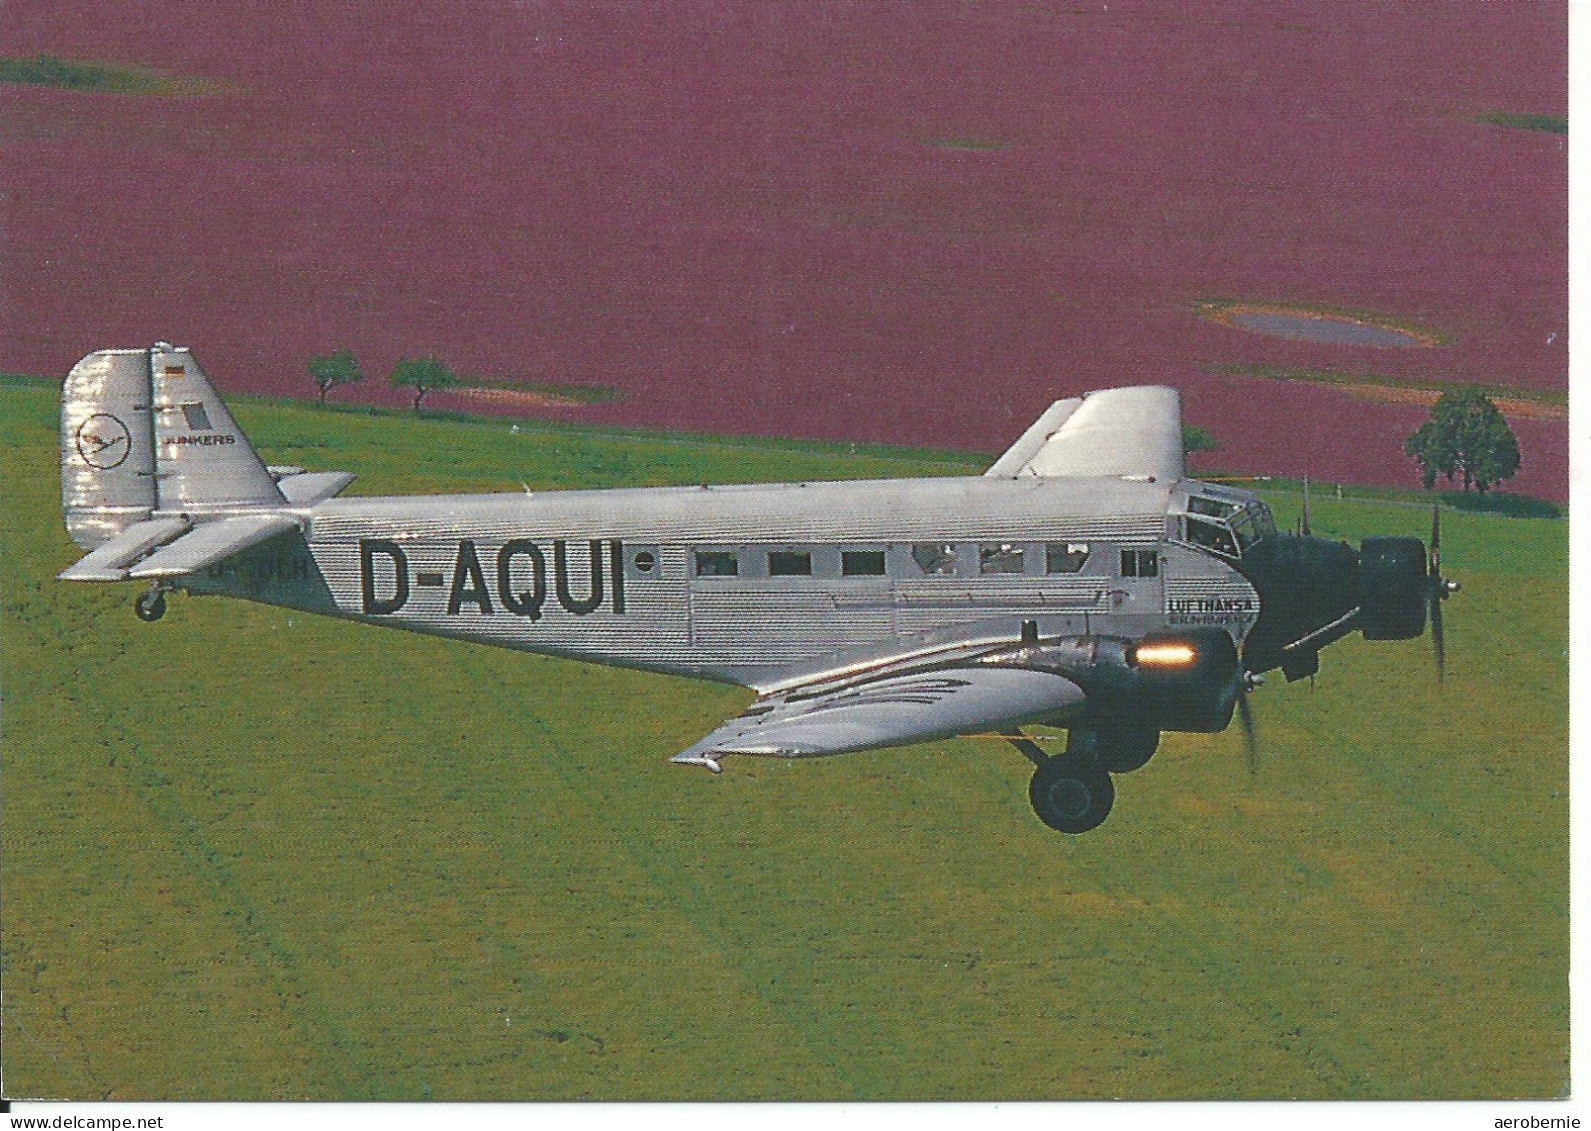 LUFTHANSA Traditionsflug - Junkers Ju52 (Airline Issue) - 1919-1938: Between Wars